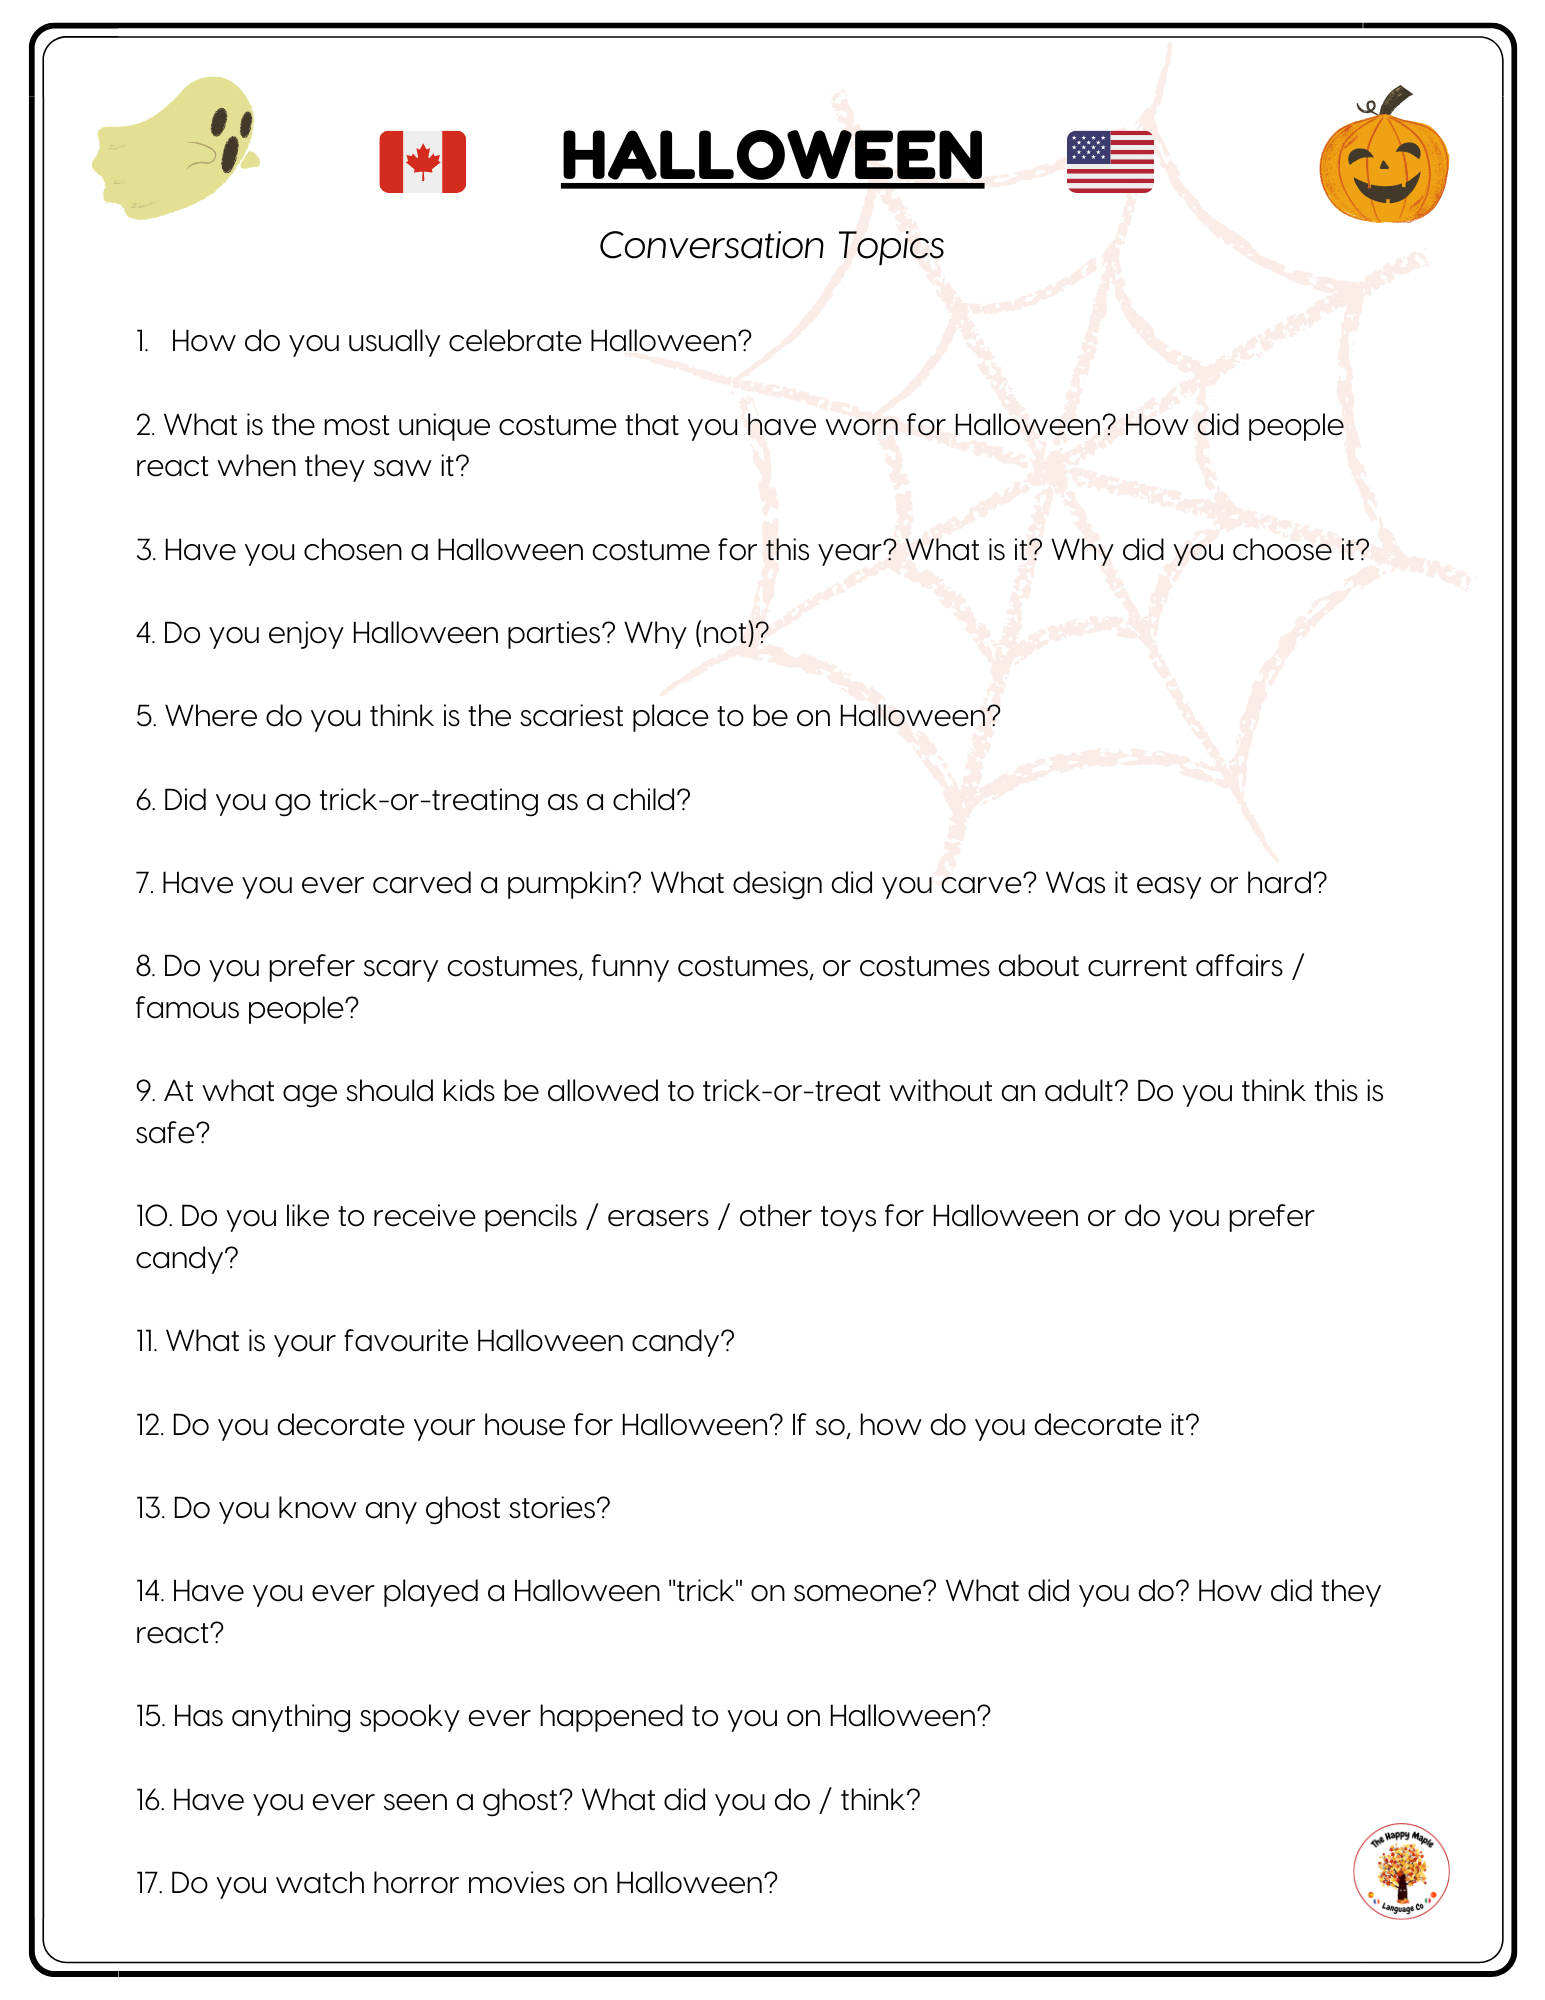 ESL Halloween Conversation Questions